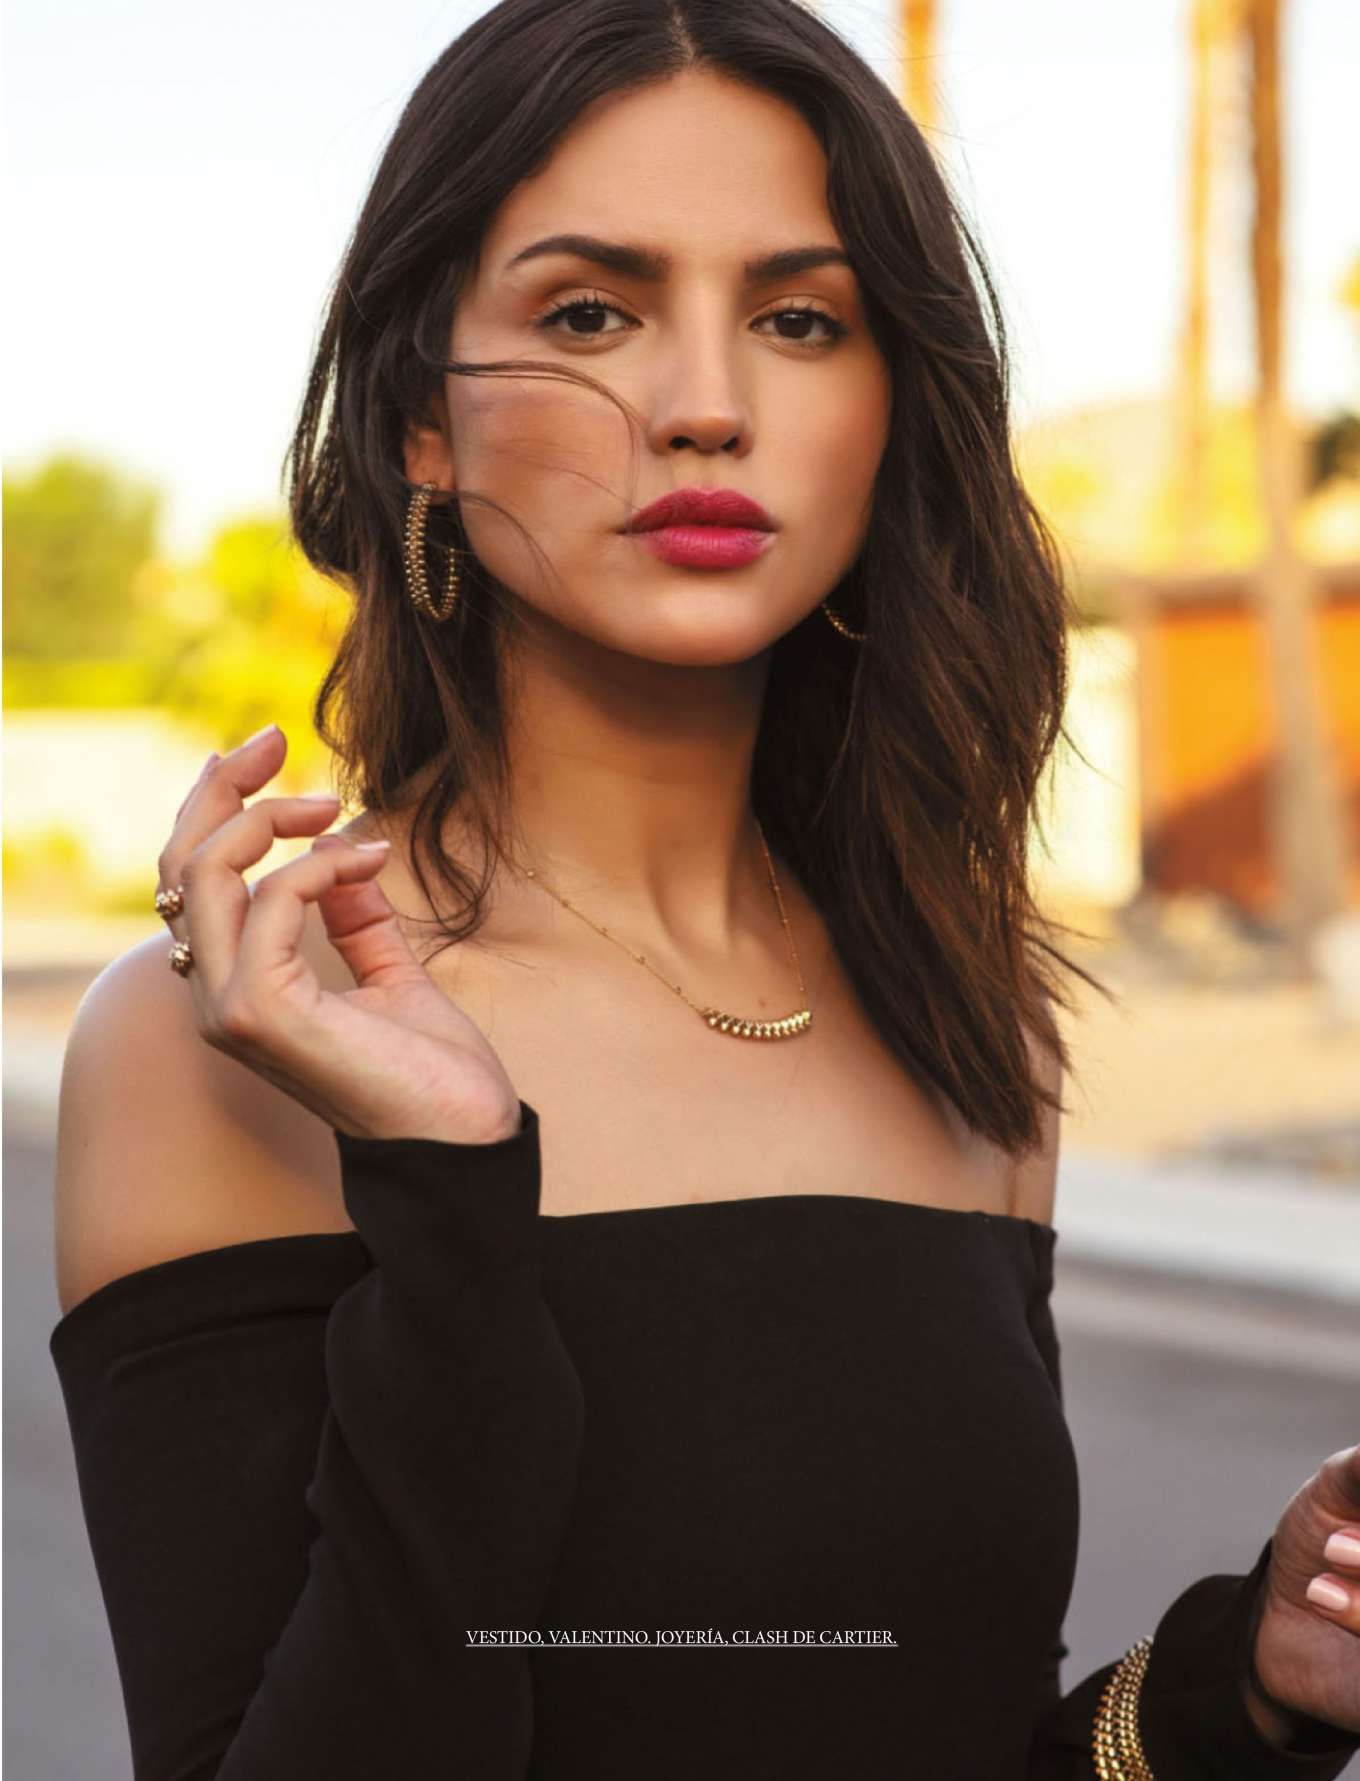 Actress Eiza Gonzalez 2021 Wallpapers